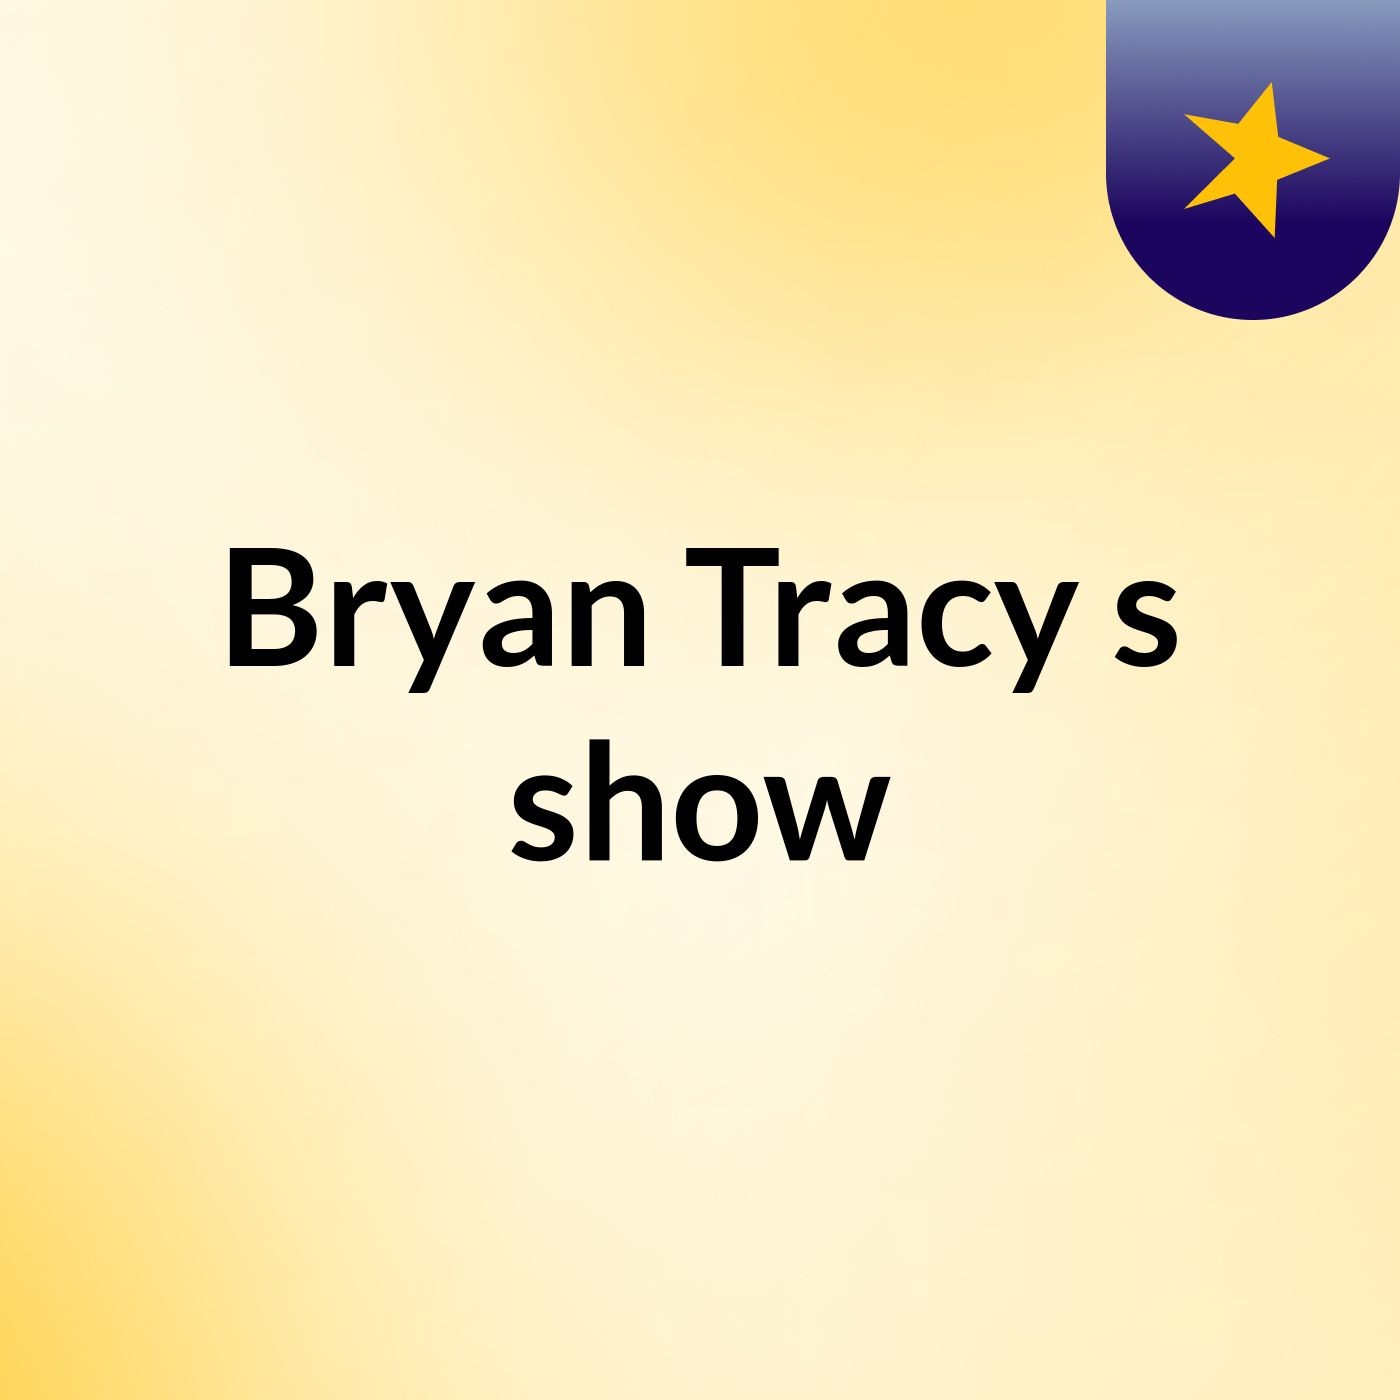 Bryan Tracy's show